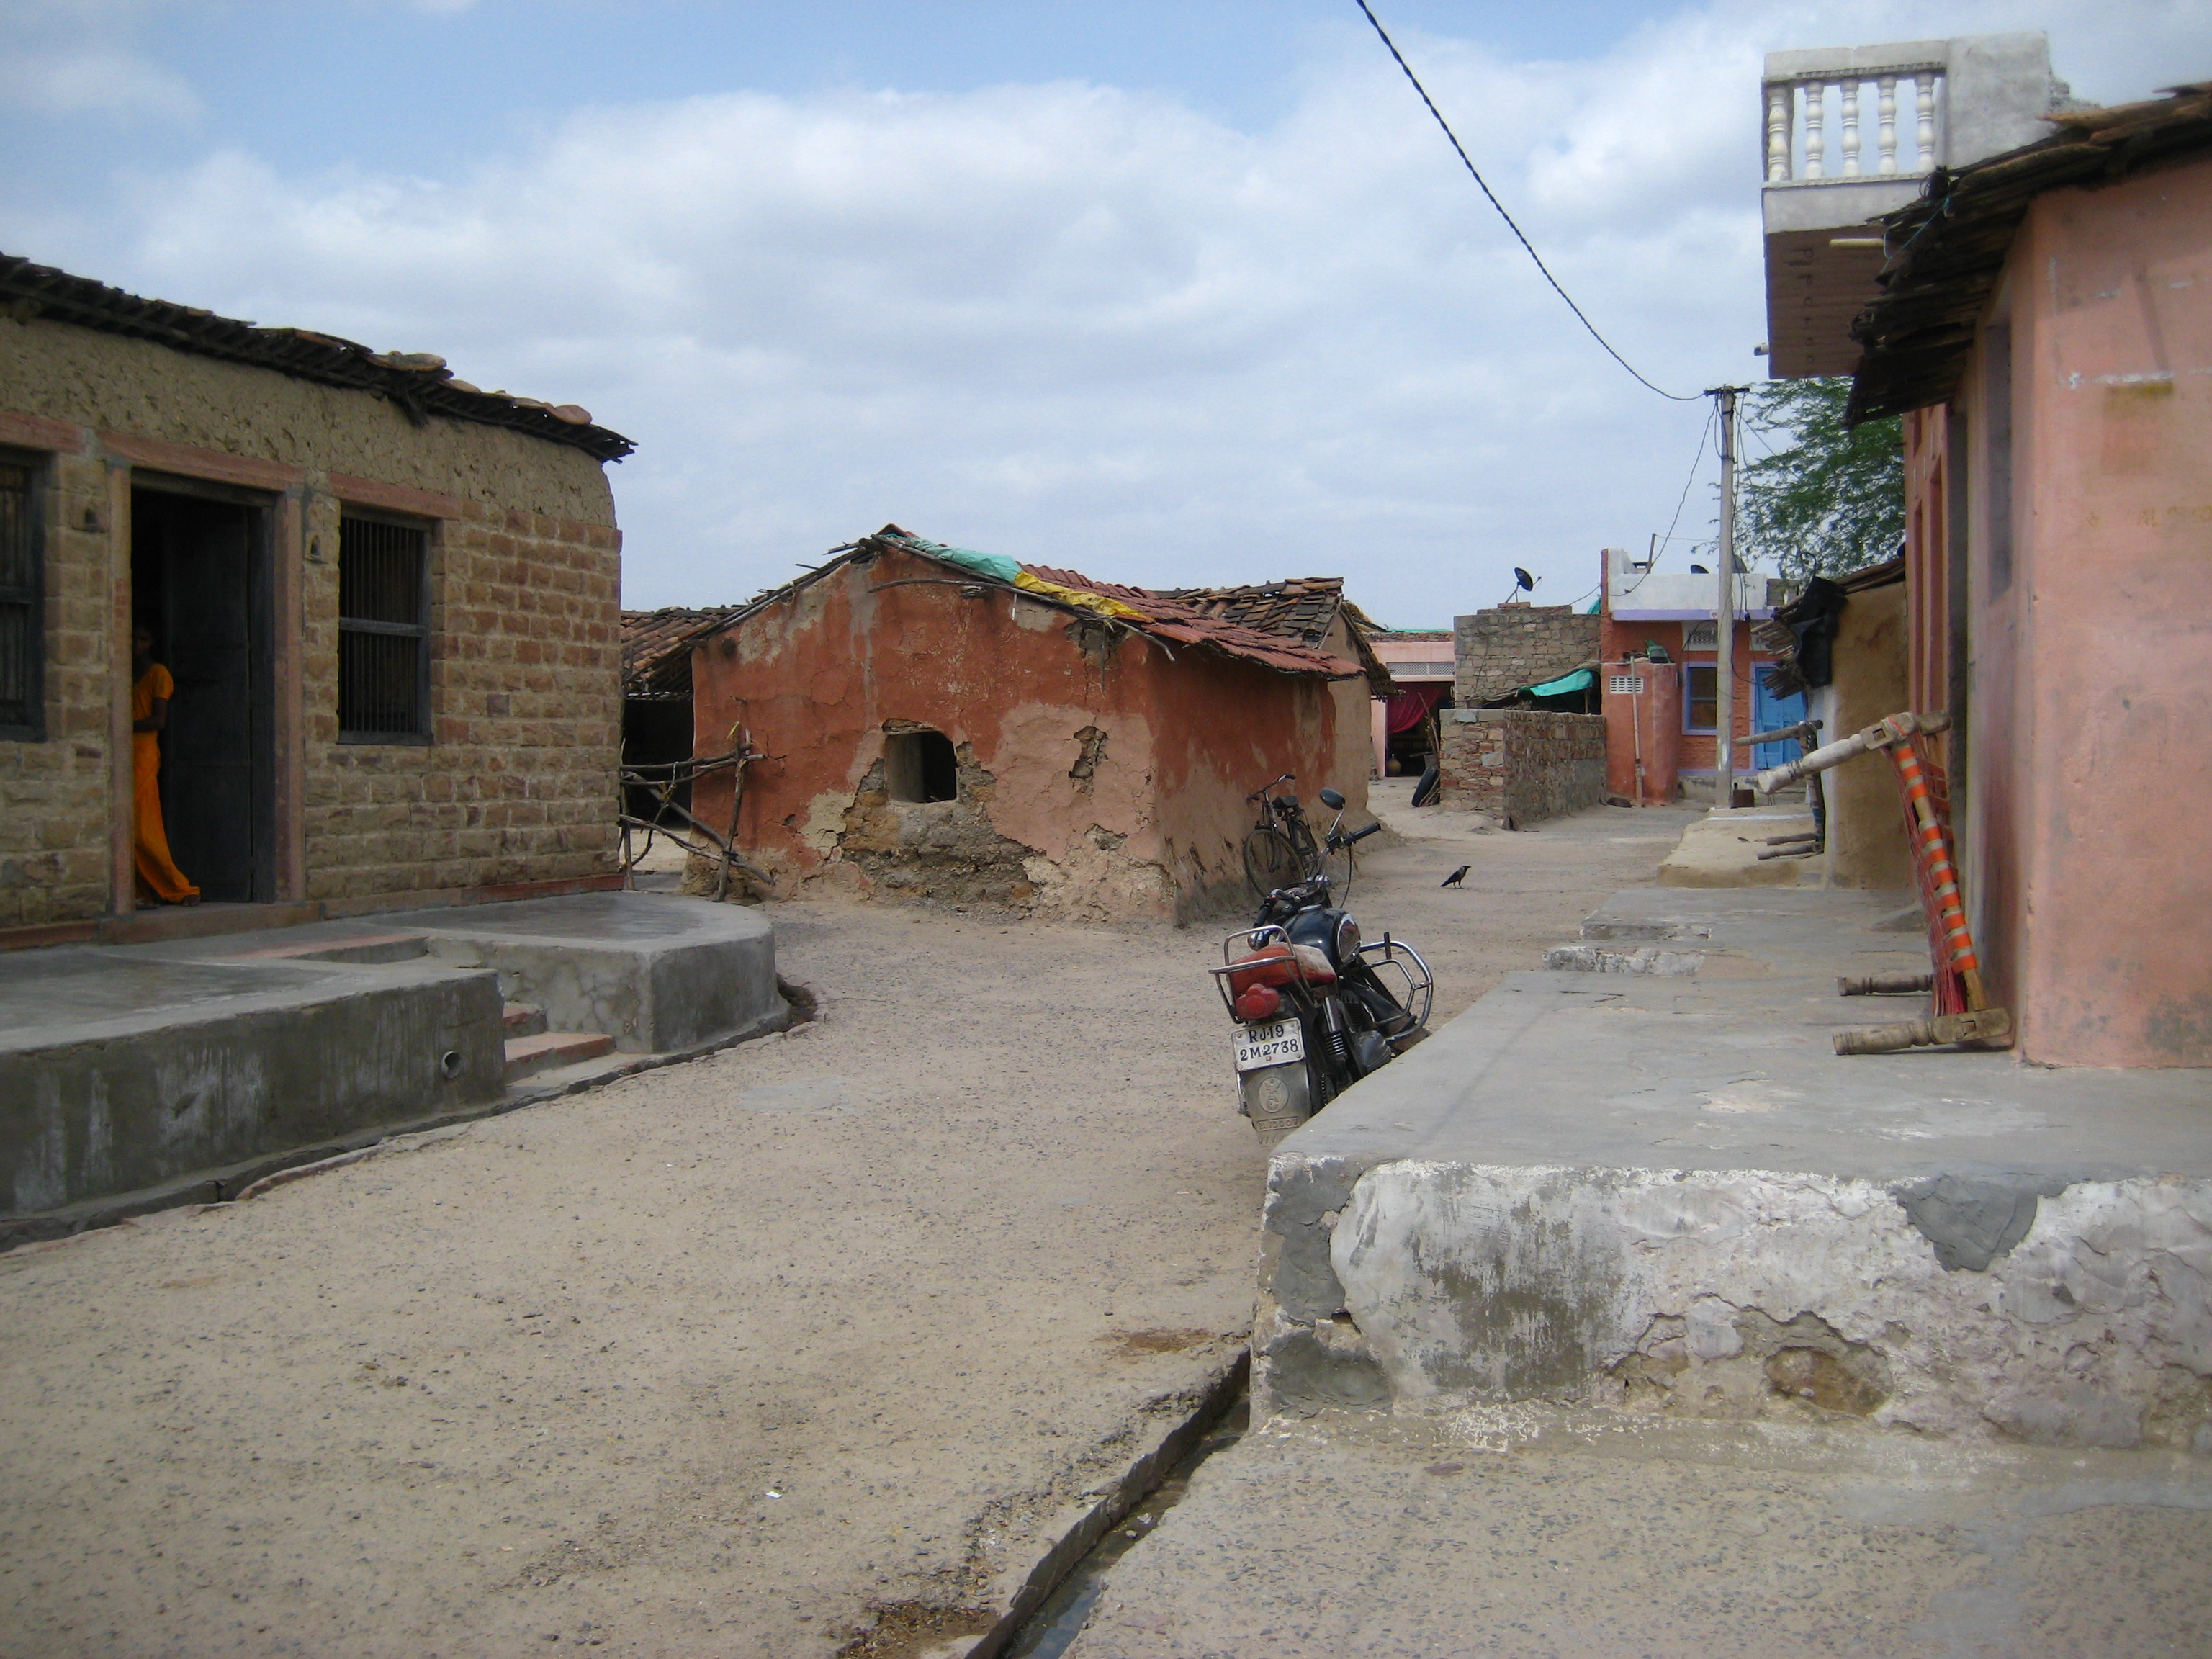 Remote village street in India